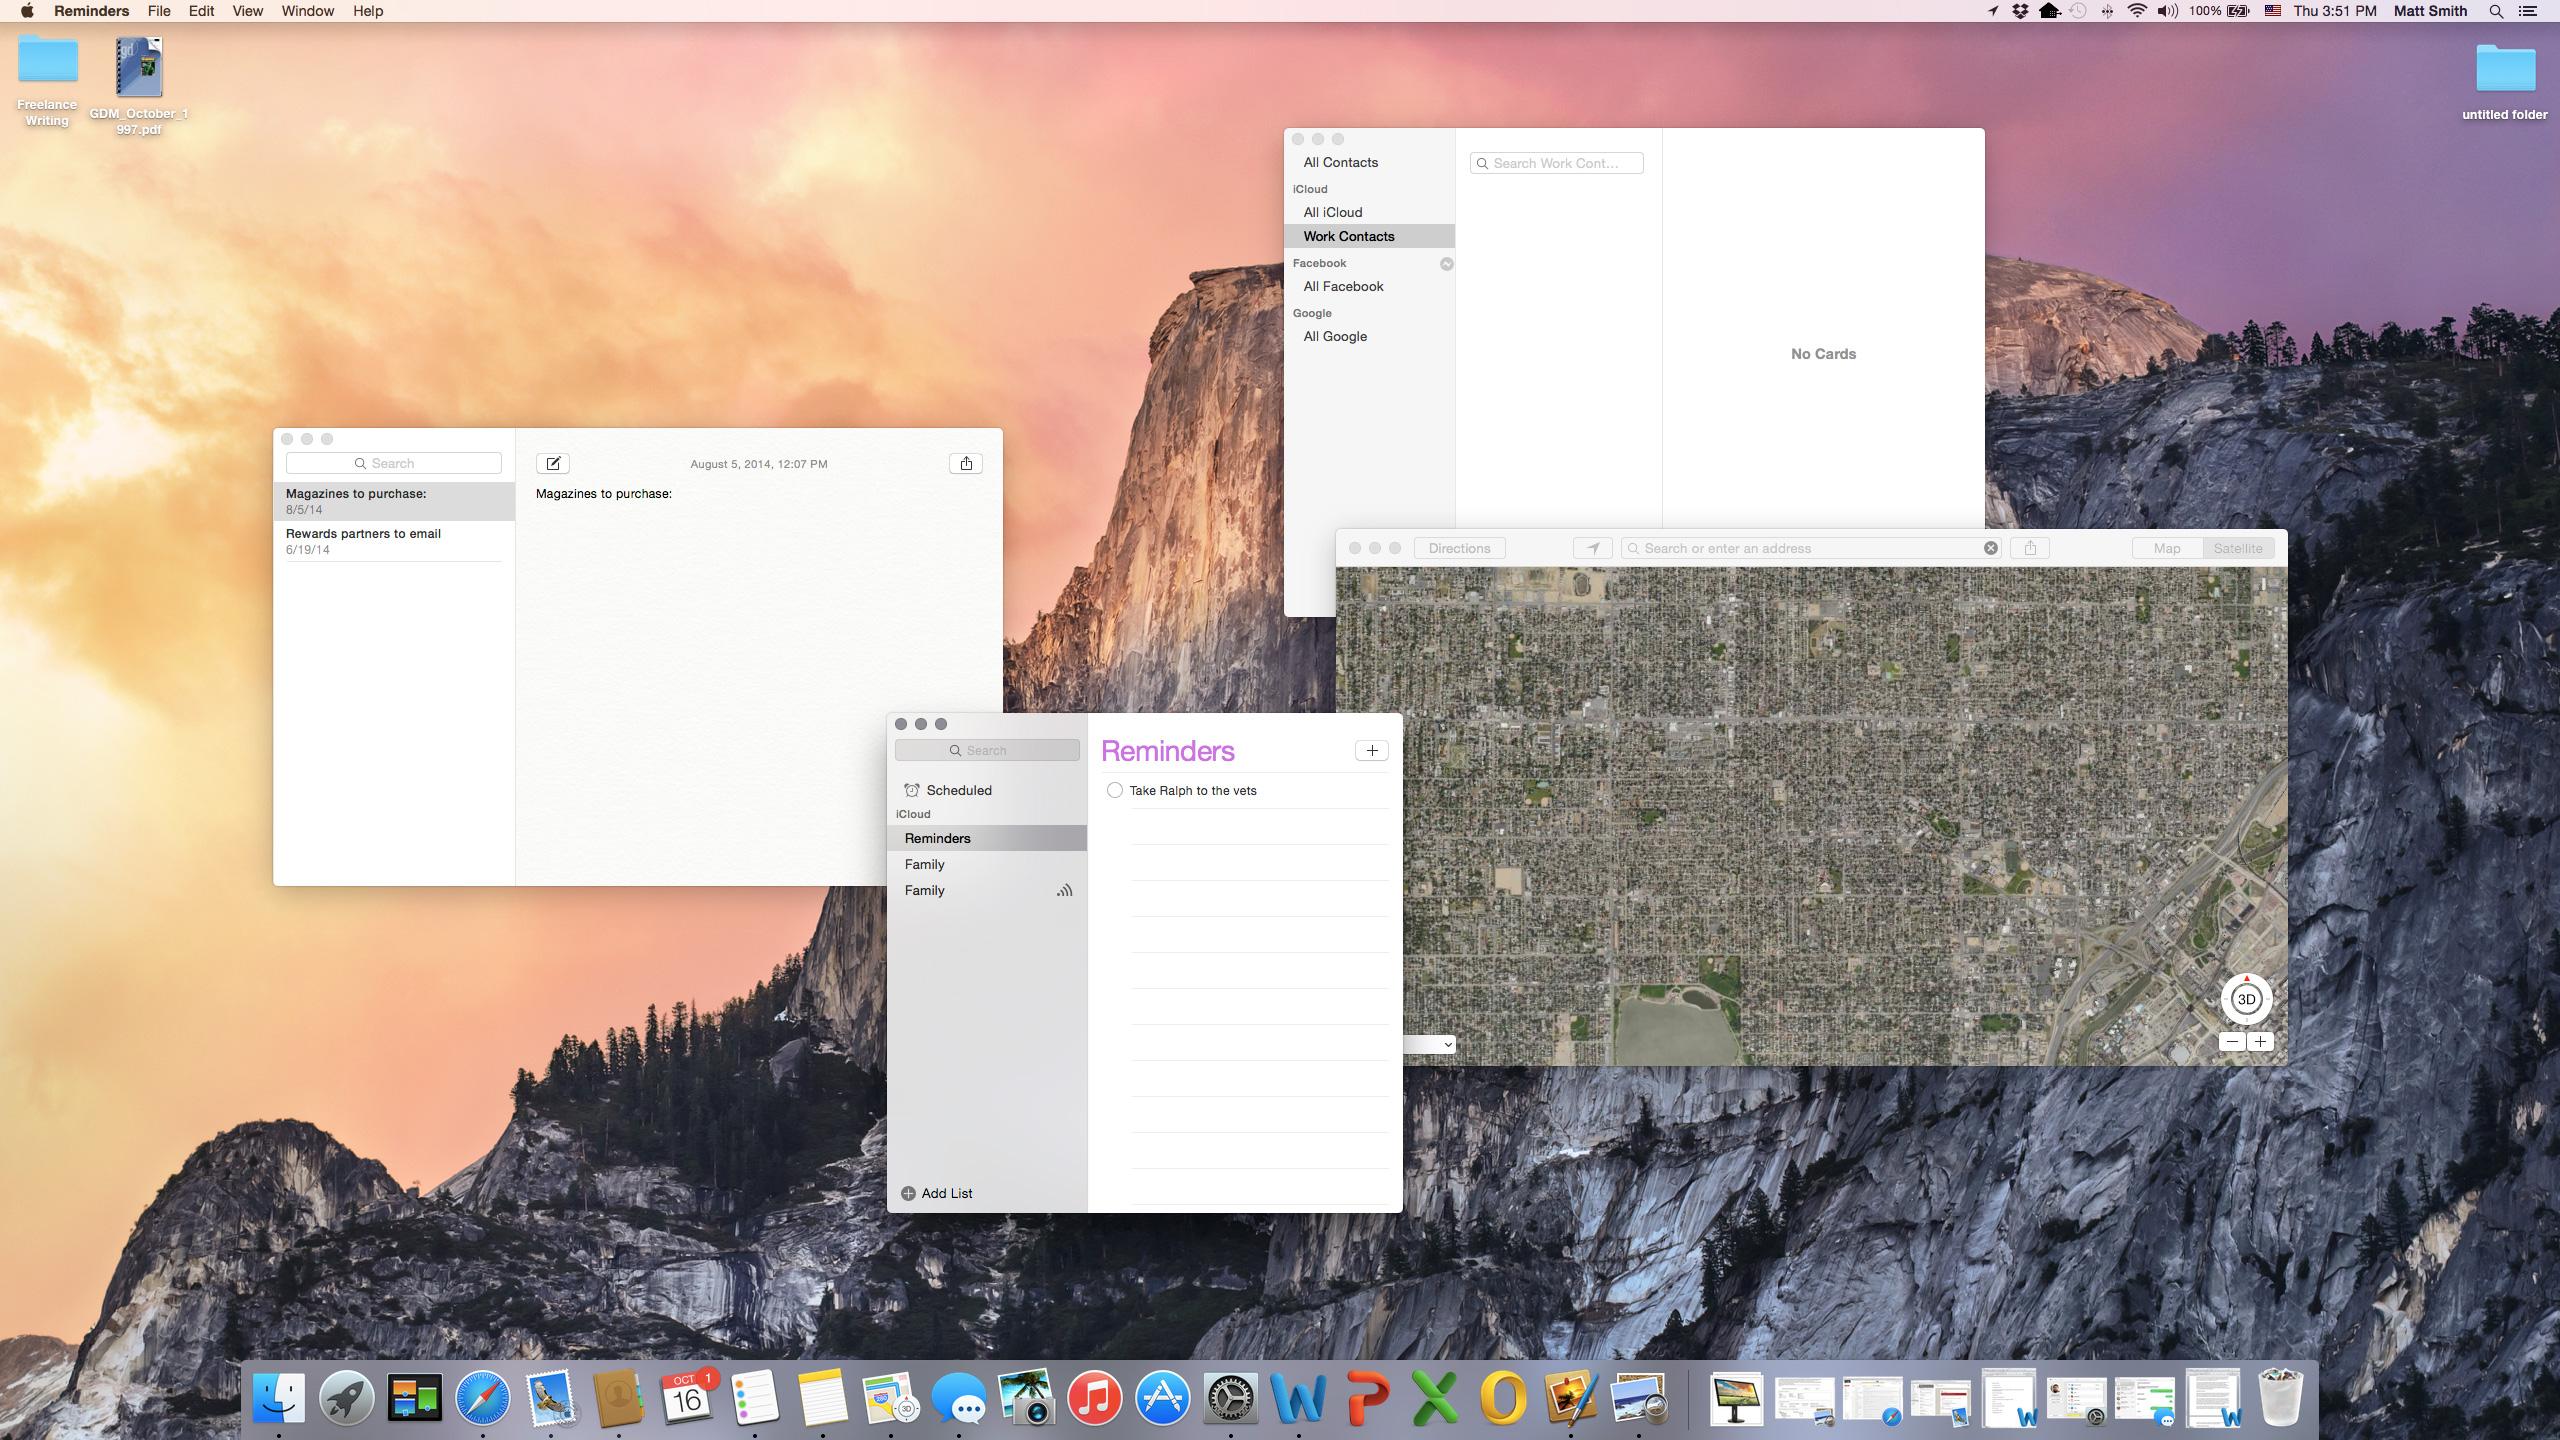 OS X Yosemite apps